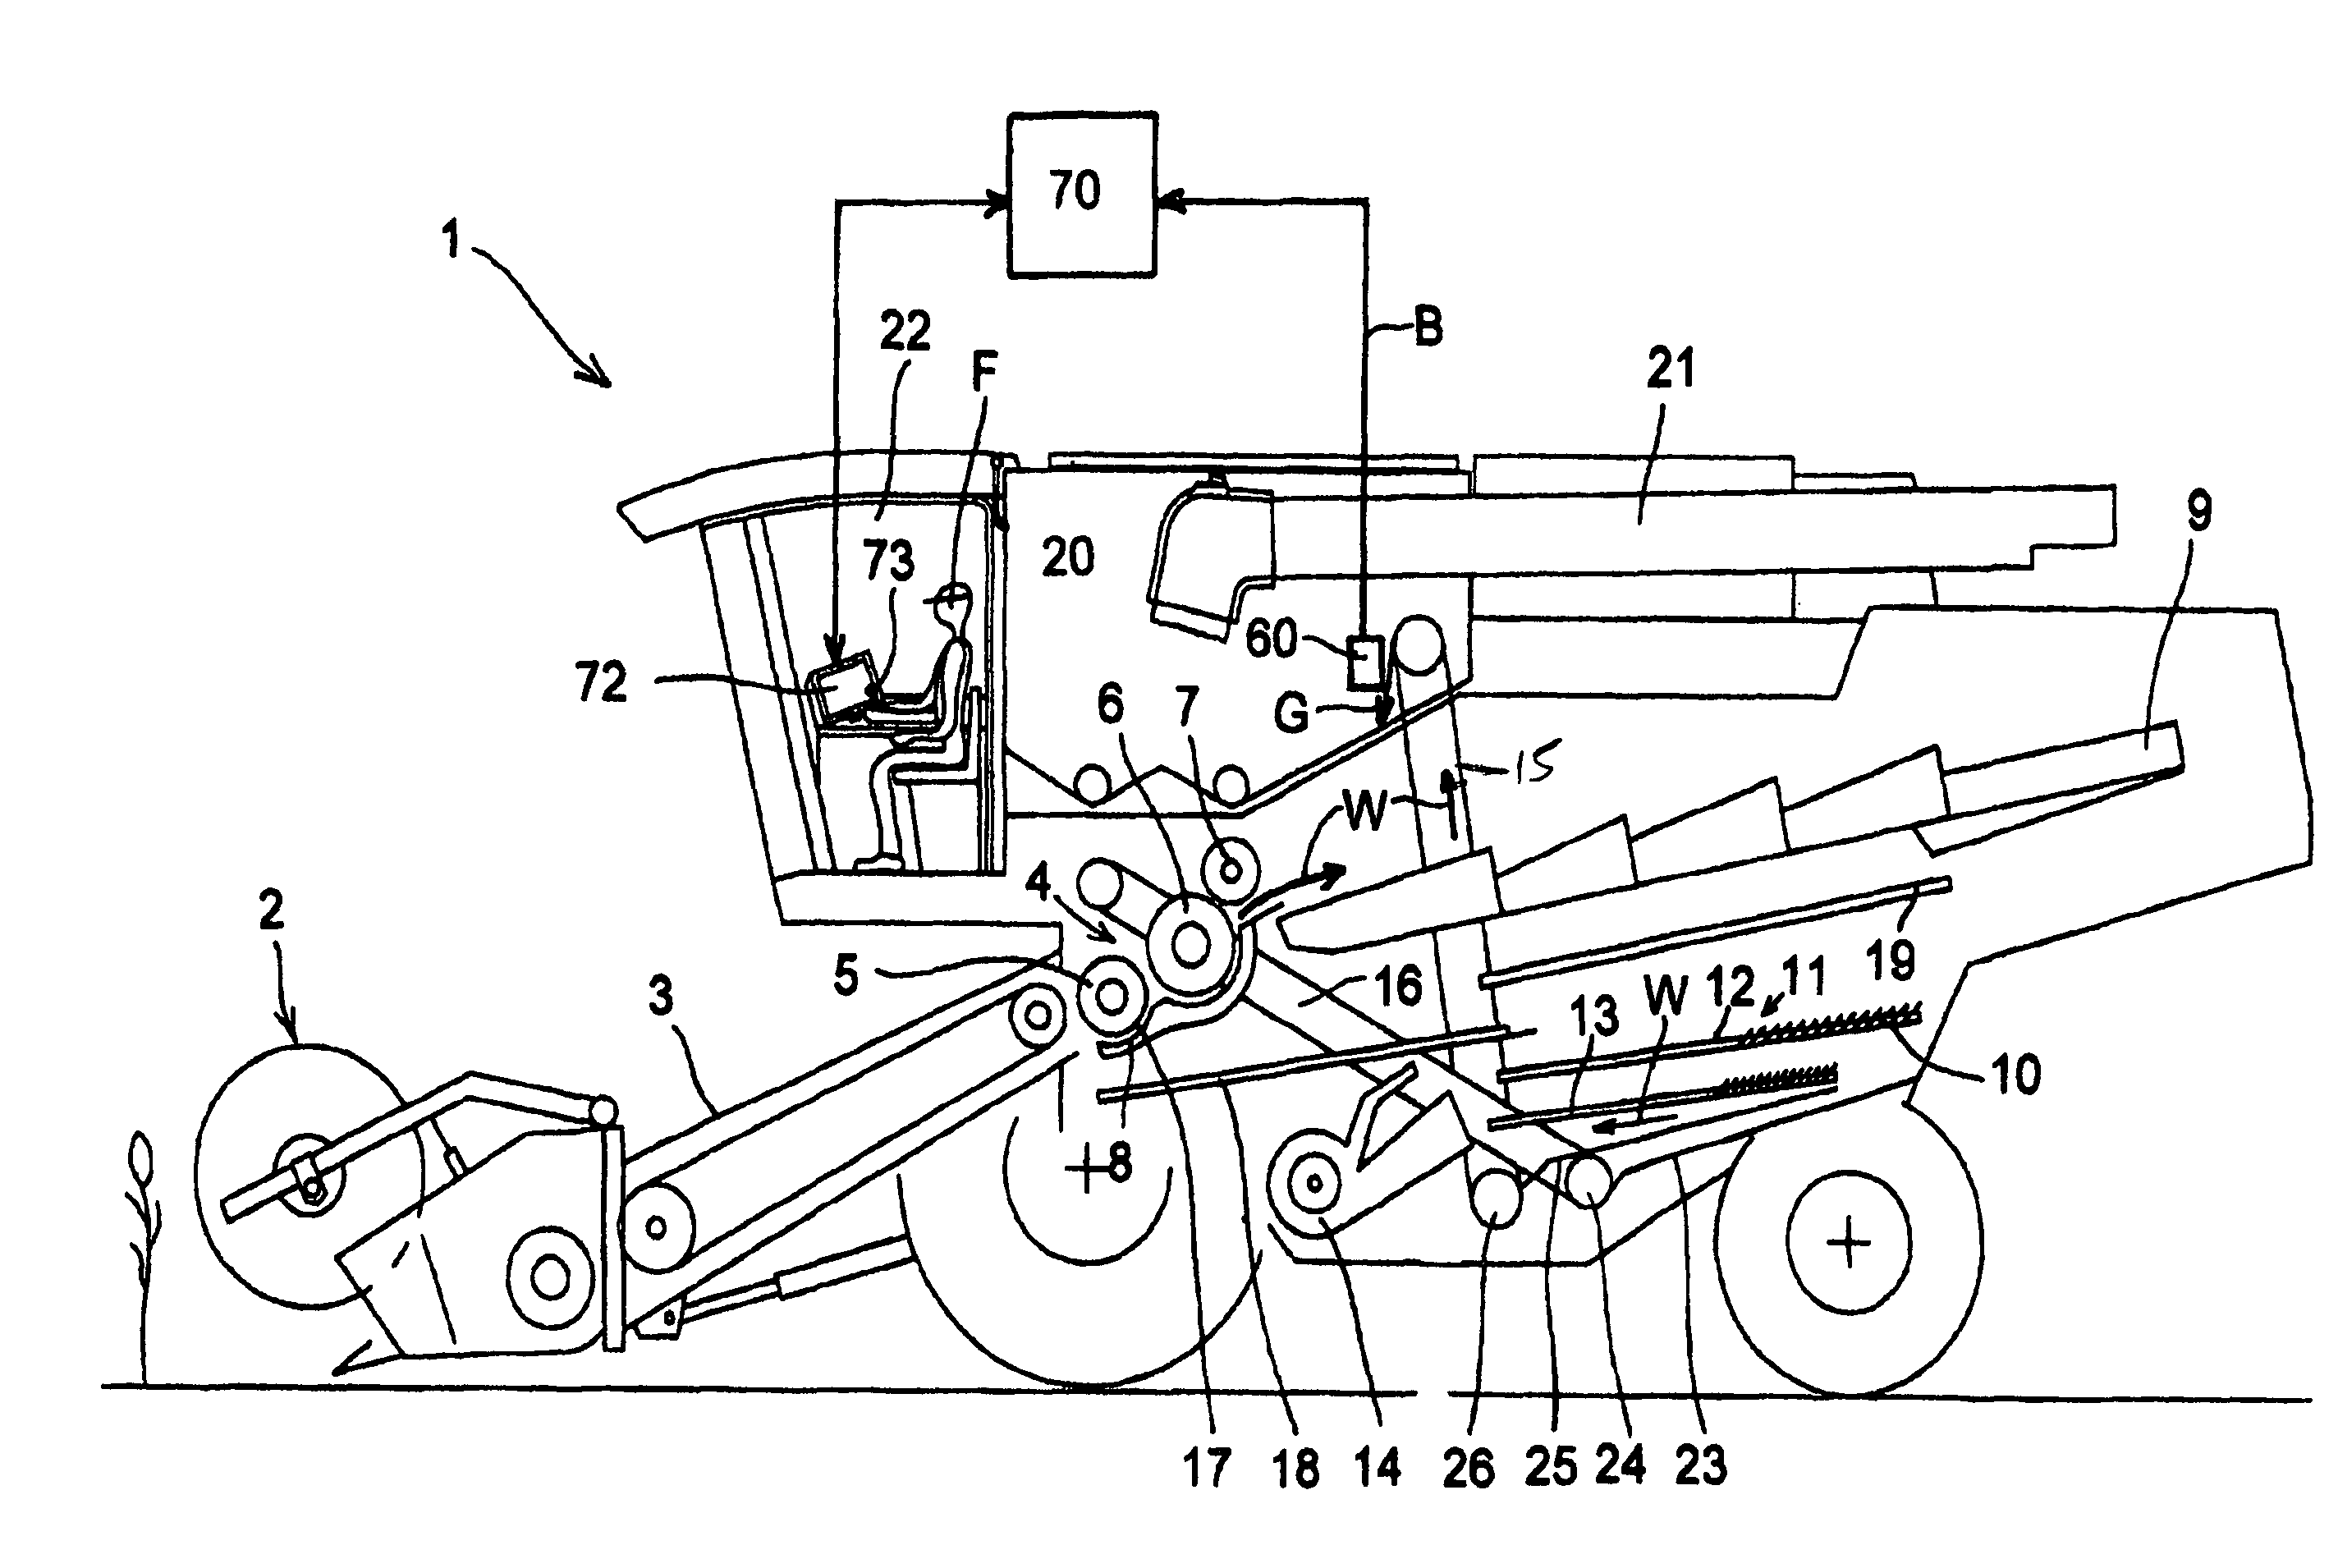 Method for adjusting a working unit of a harvesting machine